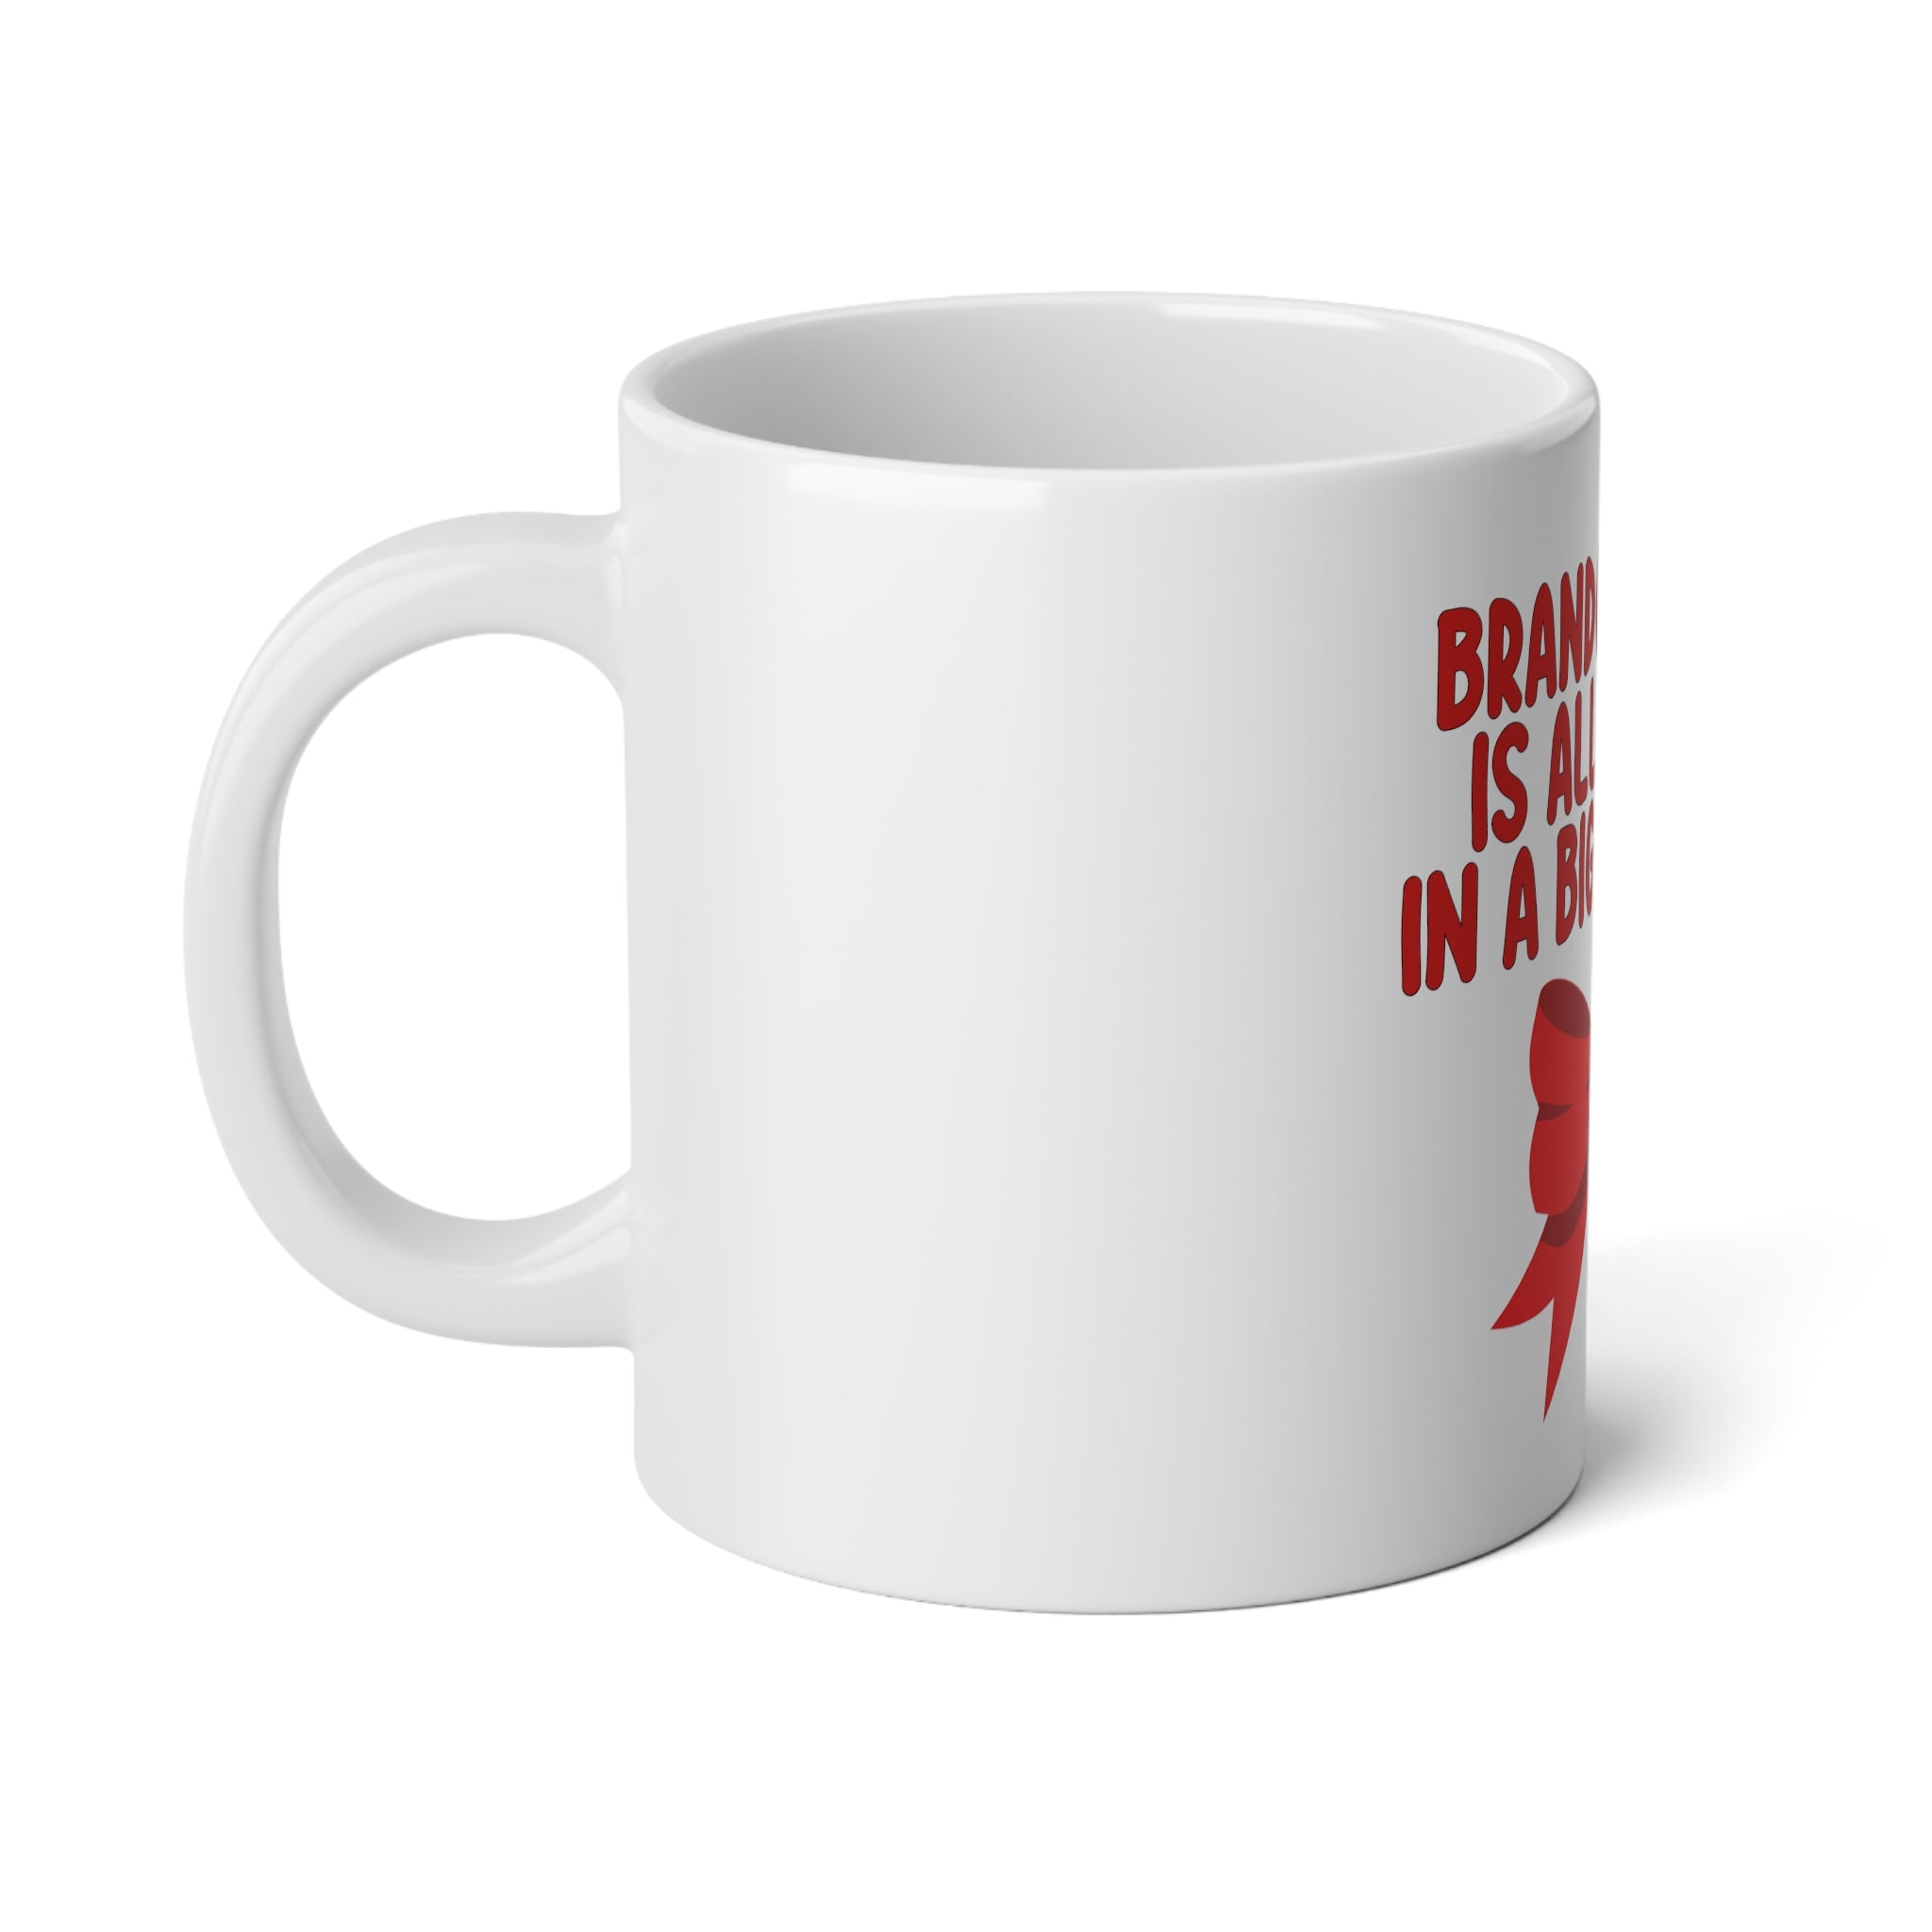 Brando Corbin is All I Want in a Big Red Bow Jumbo Mug